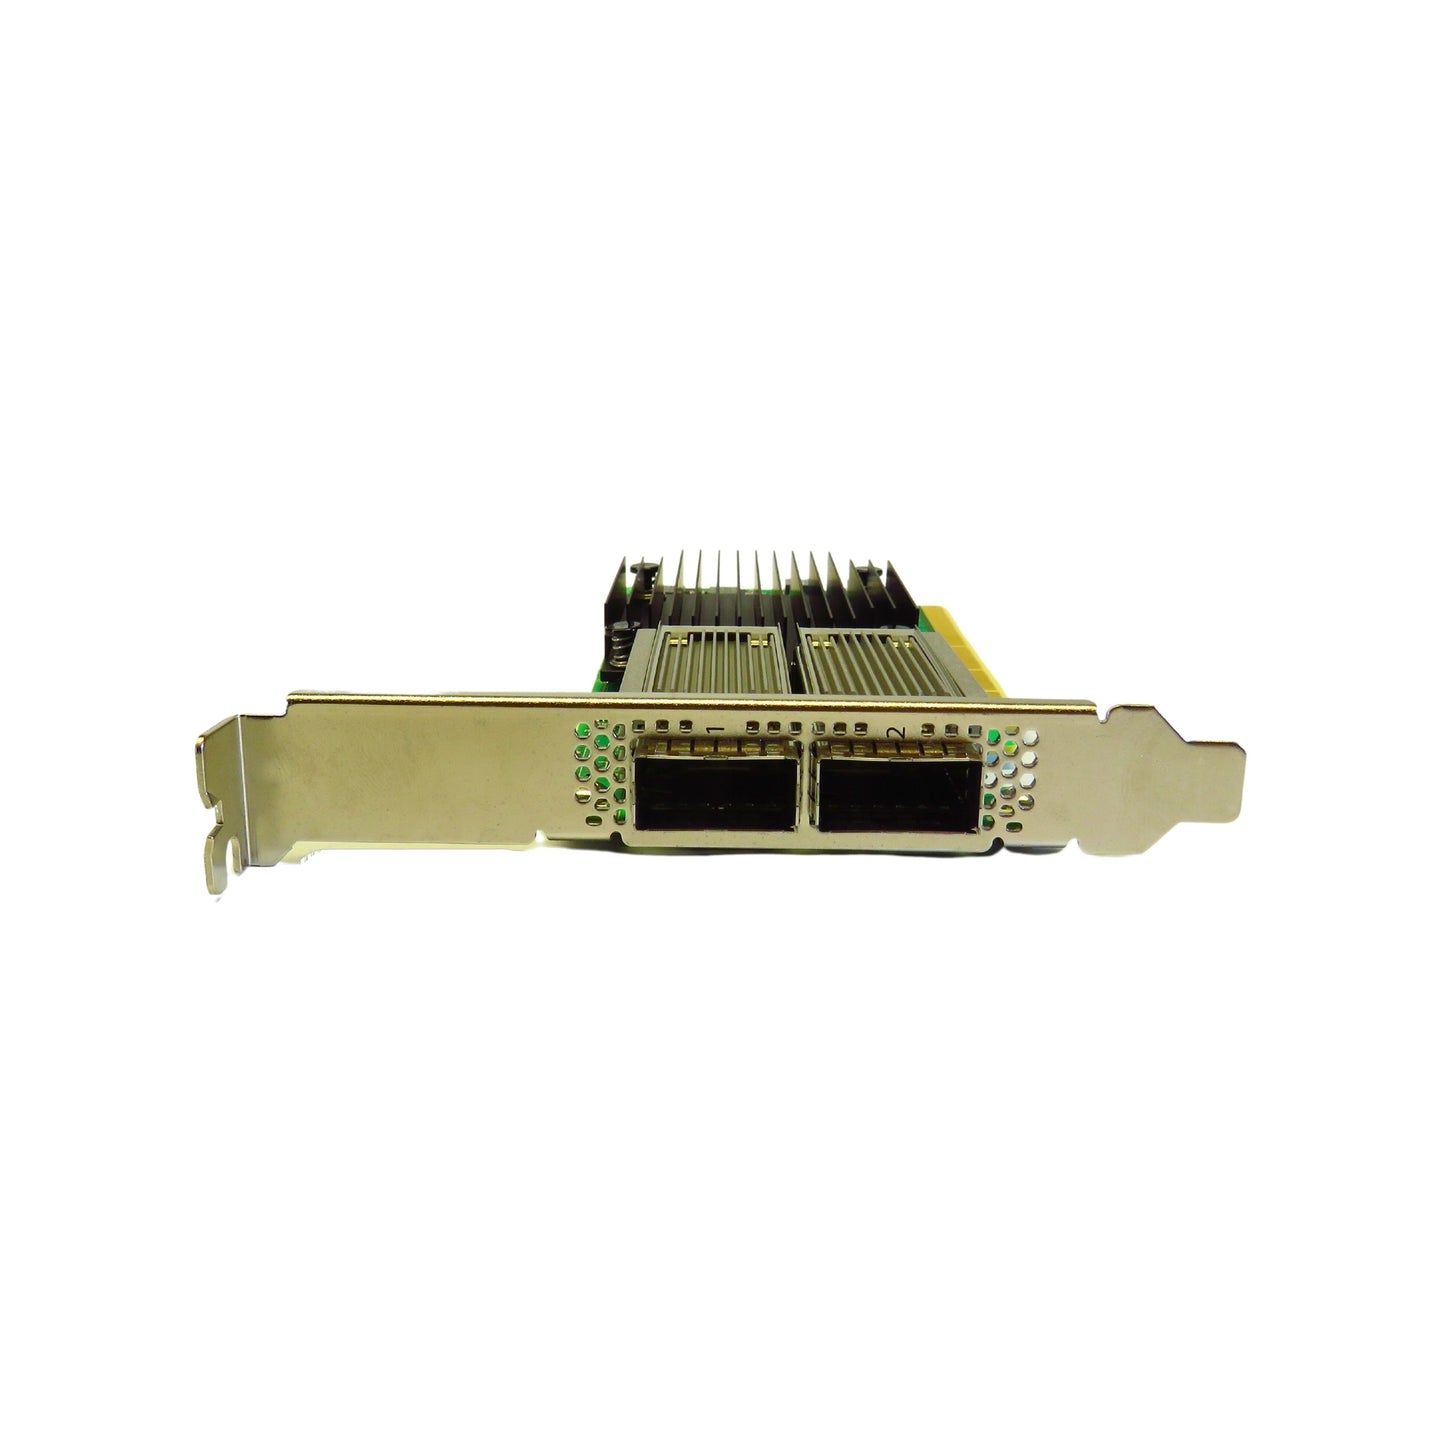 IBM 00WT176 2CF2 2-Port EDR 100GB IB ConnectX-5 CAPI Capable Adapter (Refurbished)